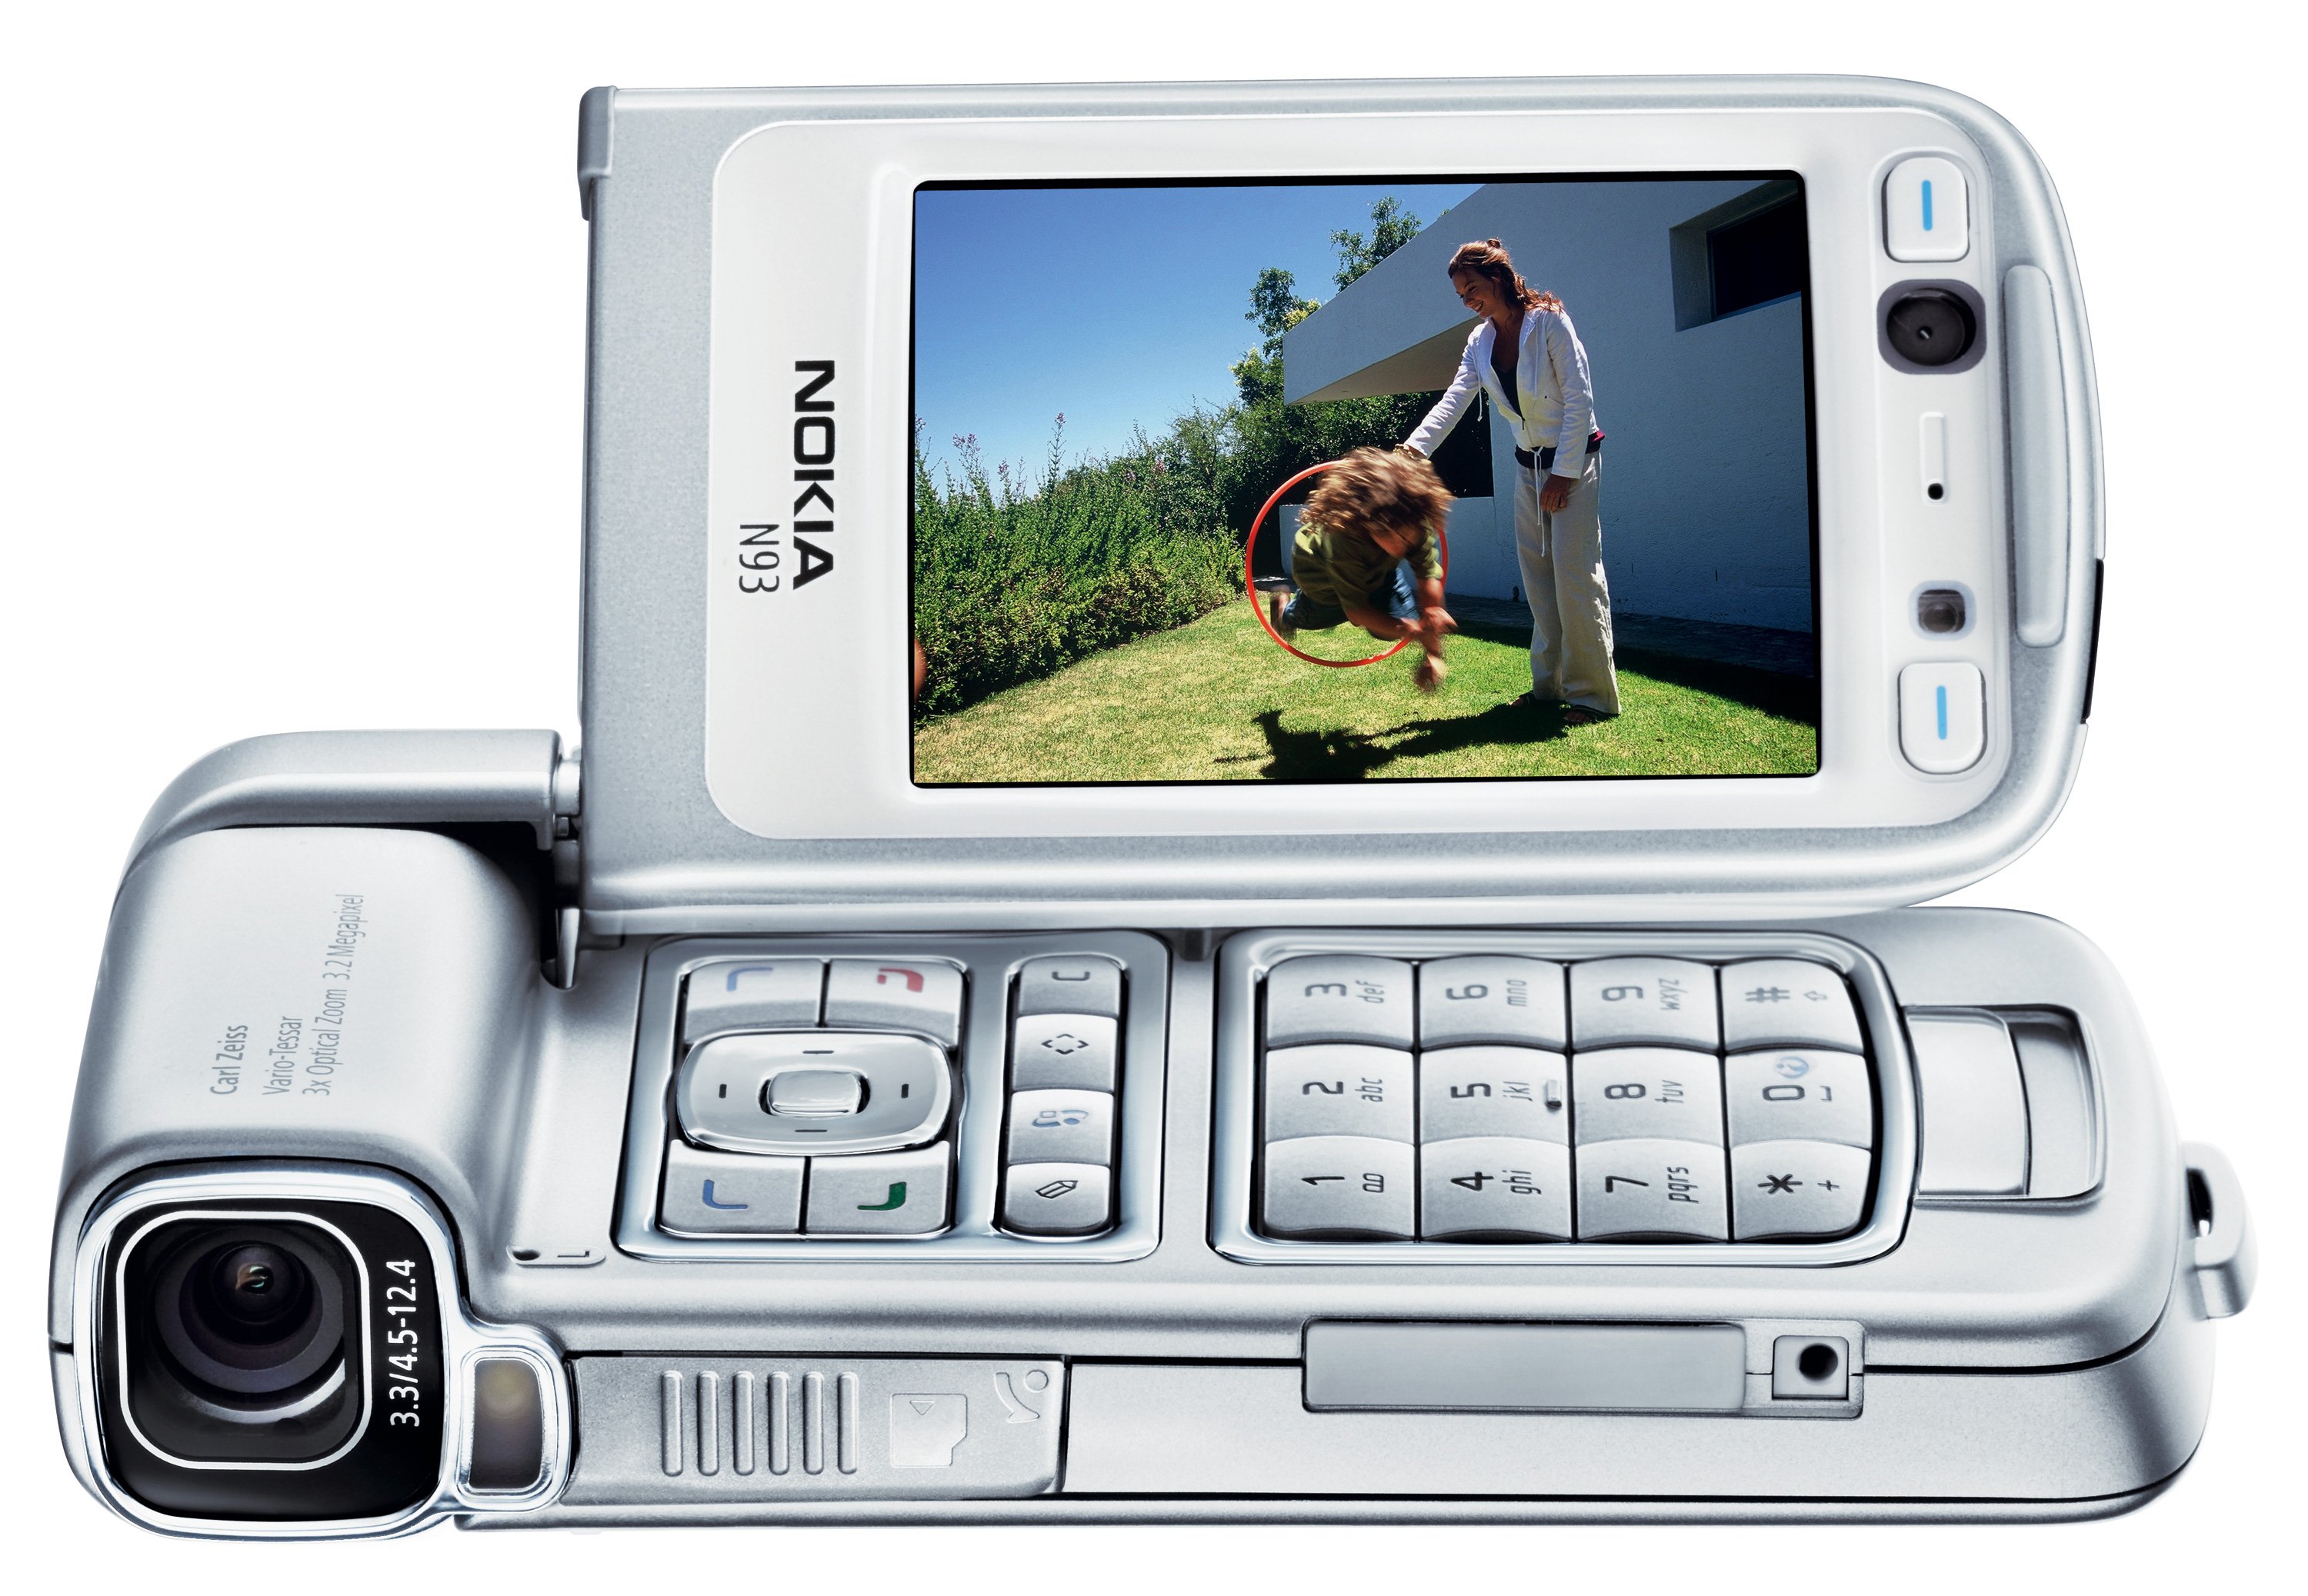 Сотовый телефон с камерой. Nokia n93. Nokia n93 2006. Нокиа н93i. Nokia n93 Mini.